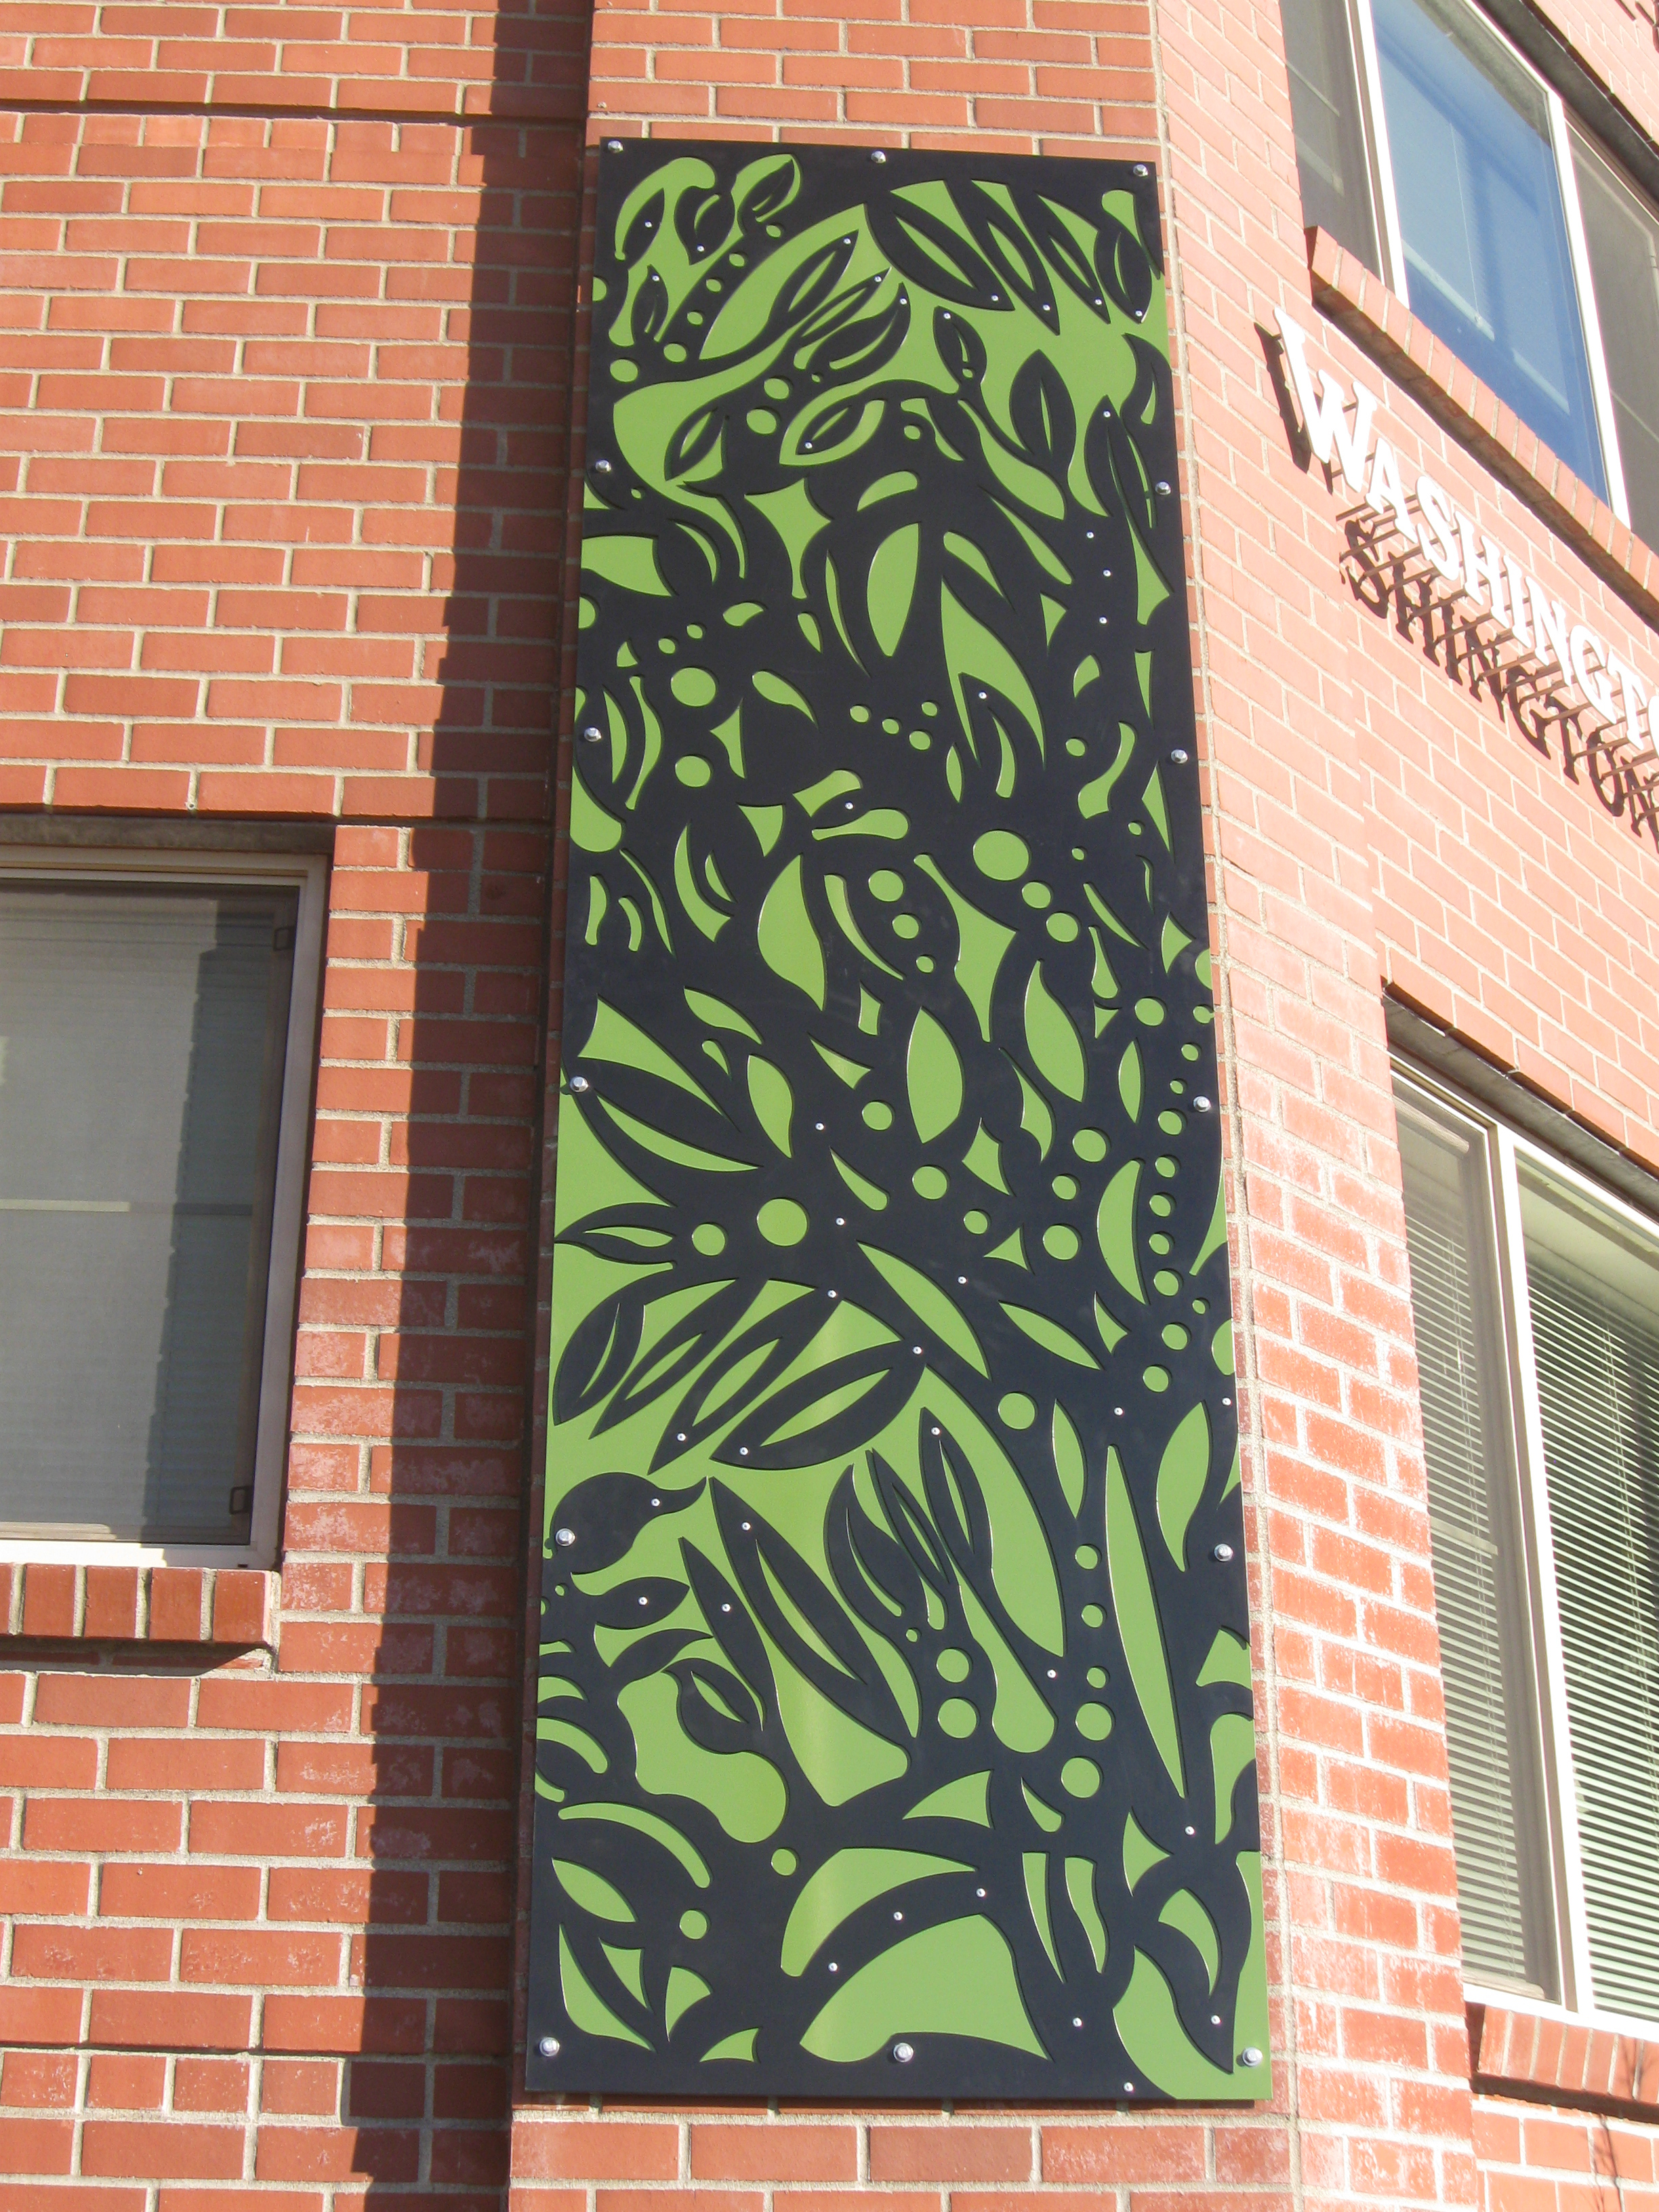  "Terrace Apartments Bamboo Panel", laser cut steel, 4'x12', 2010 